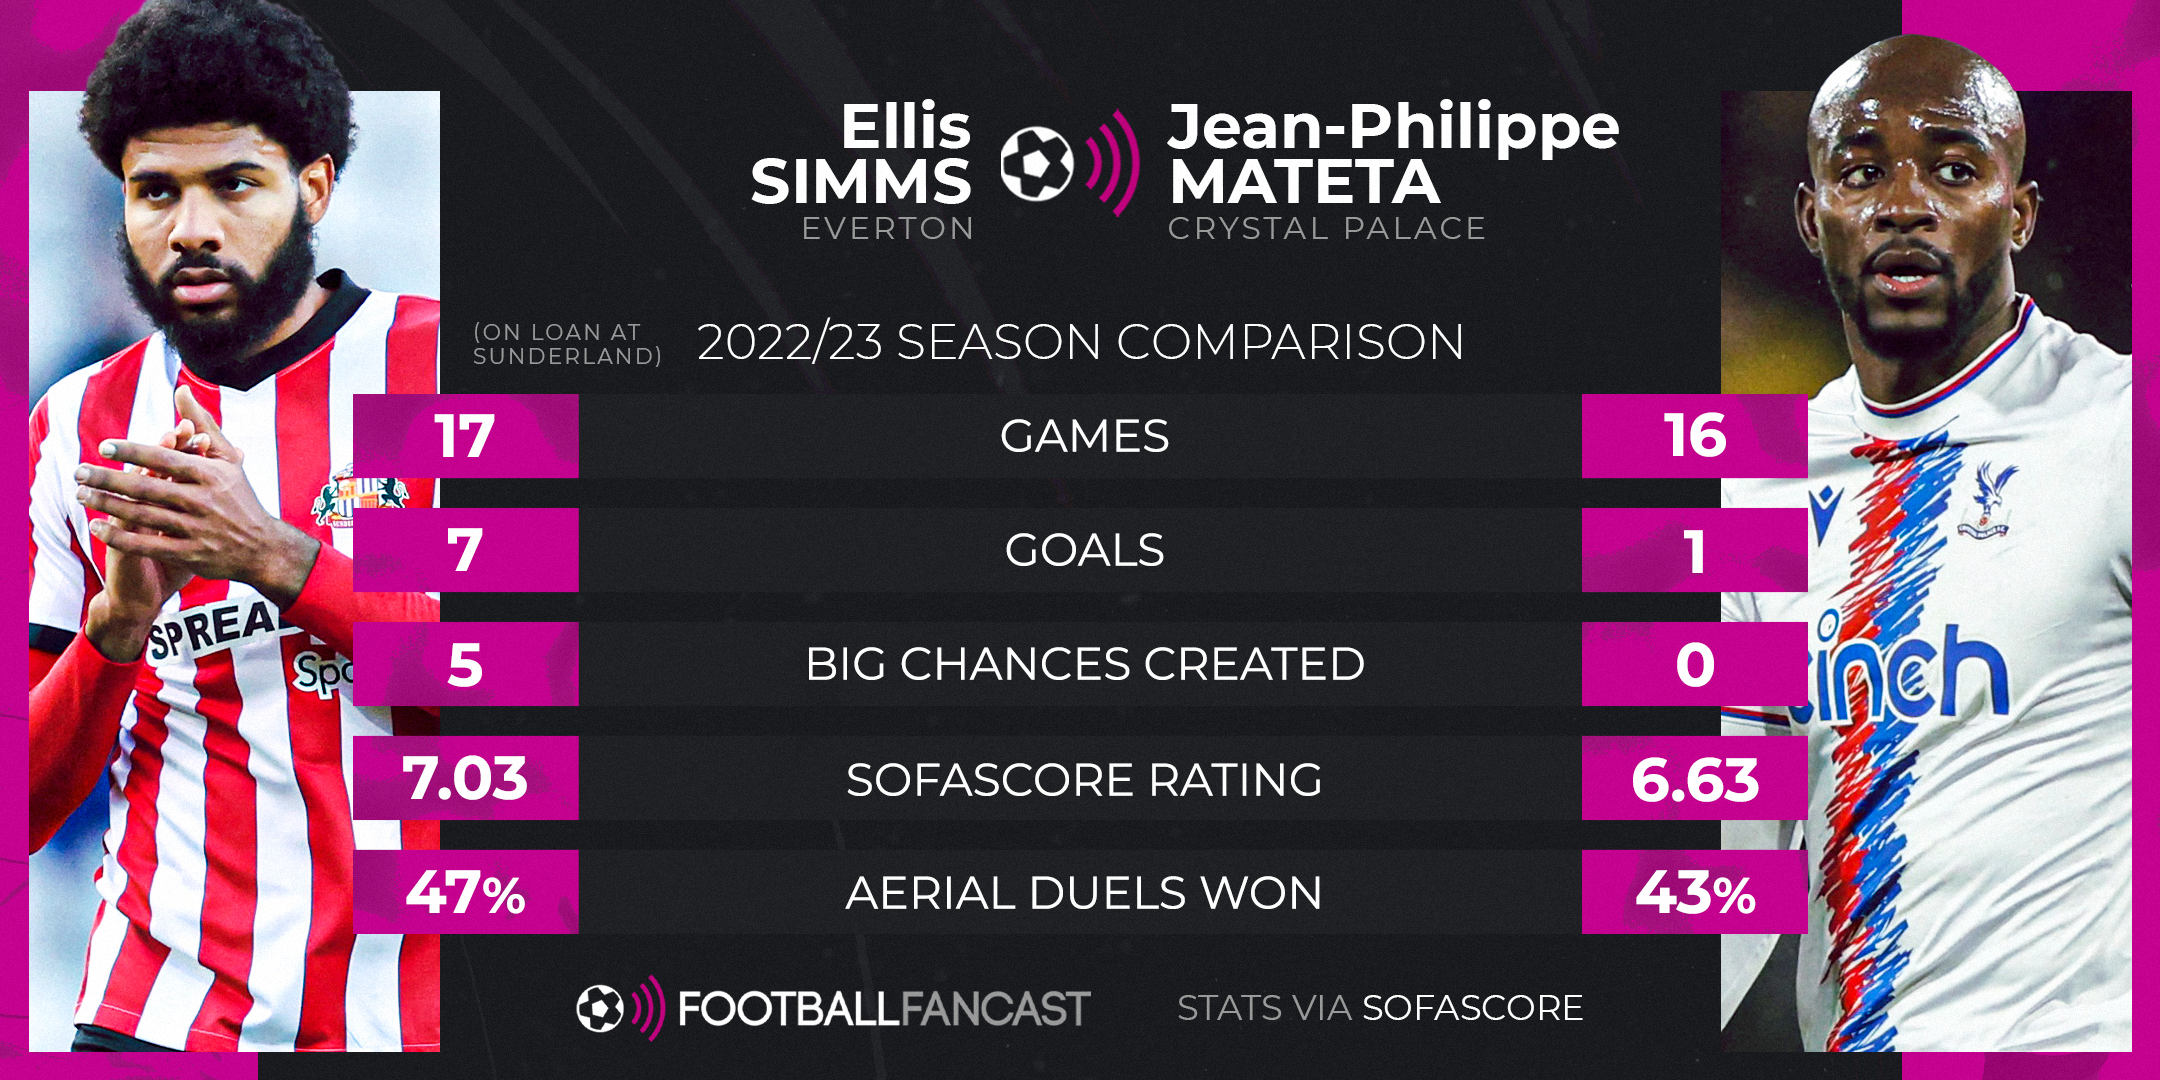 player comparison between Ellis Simms and Jean-Philippe Mateta